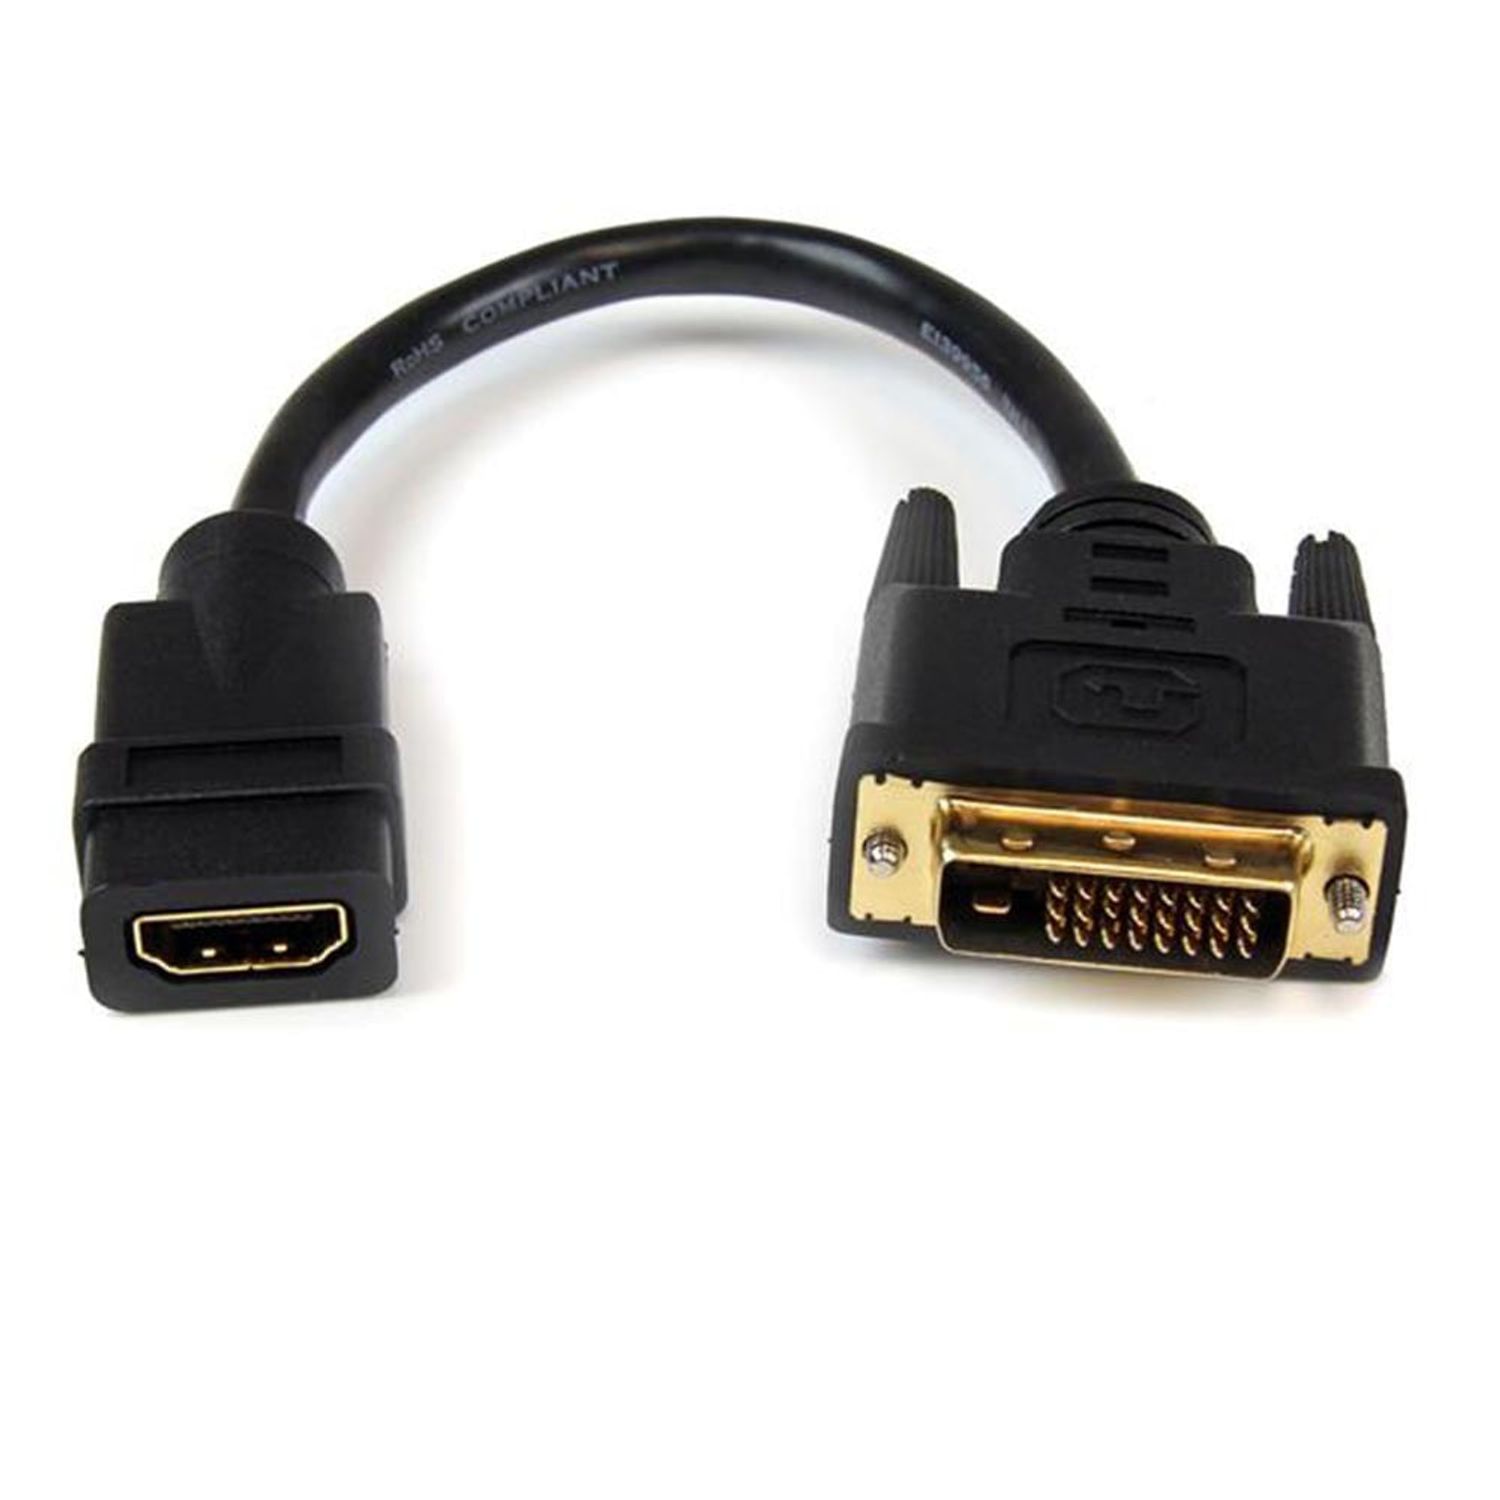 Cómo convertir un cable DVI a HDMI - 4 pasos